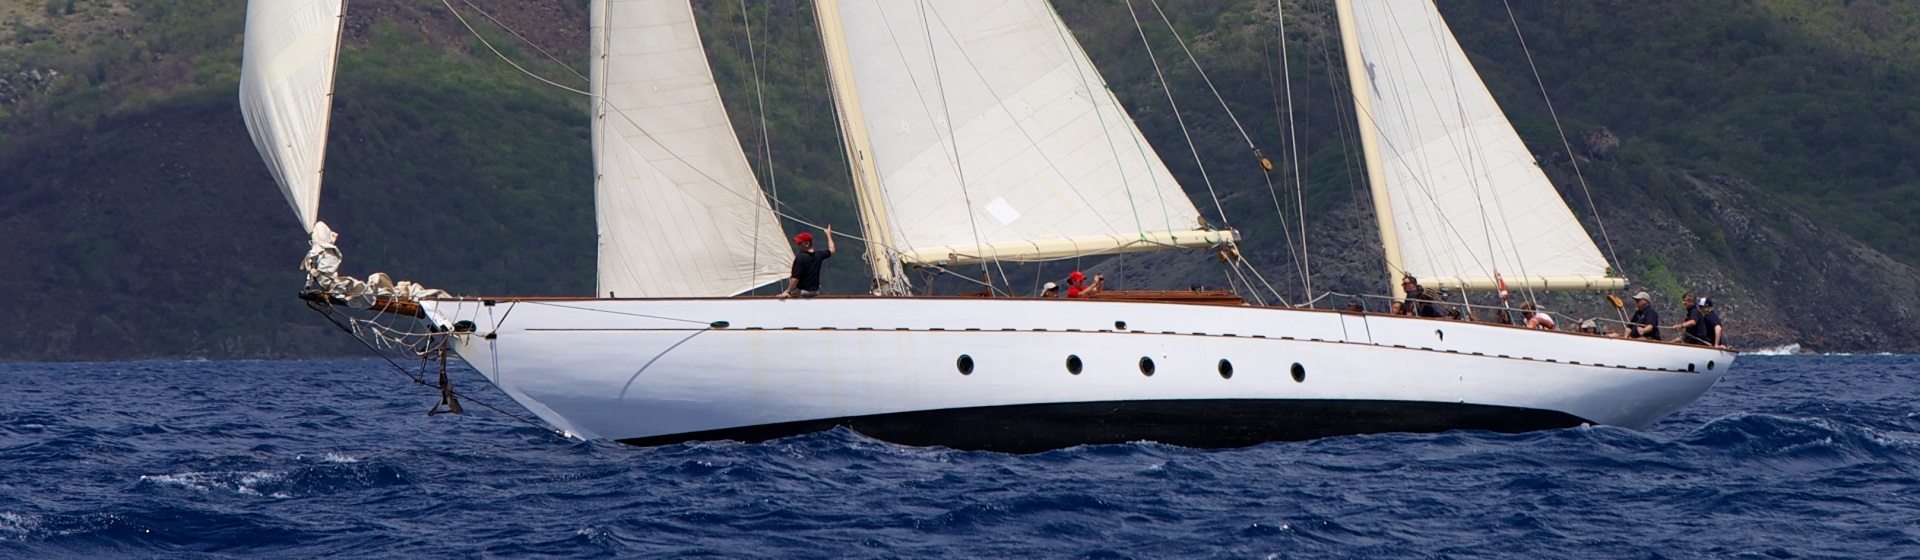 Classic sail yacht for charter palma de mallorca